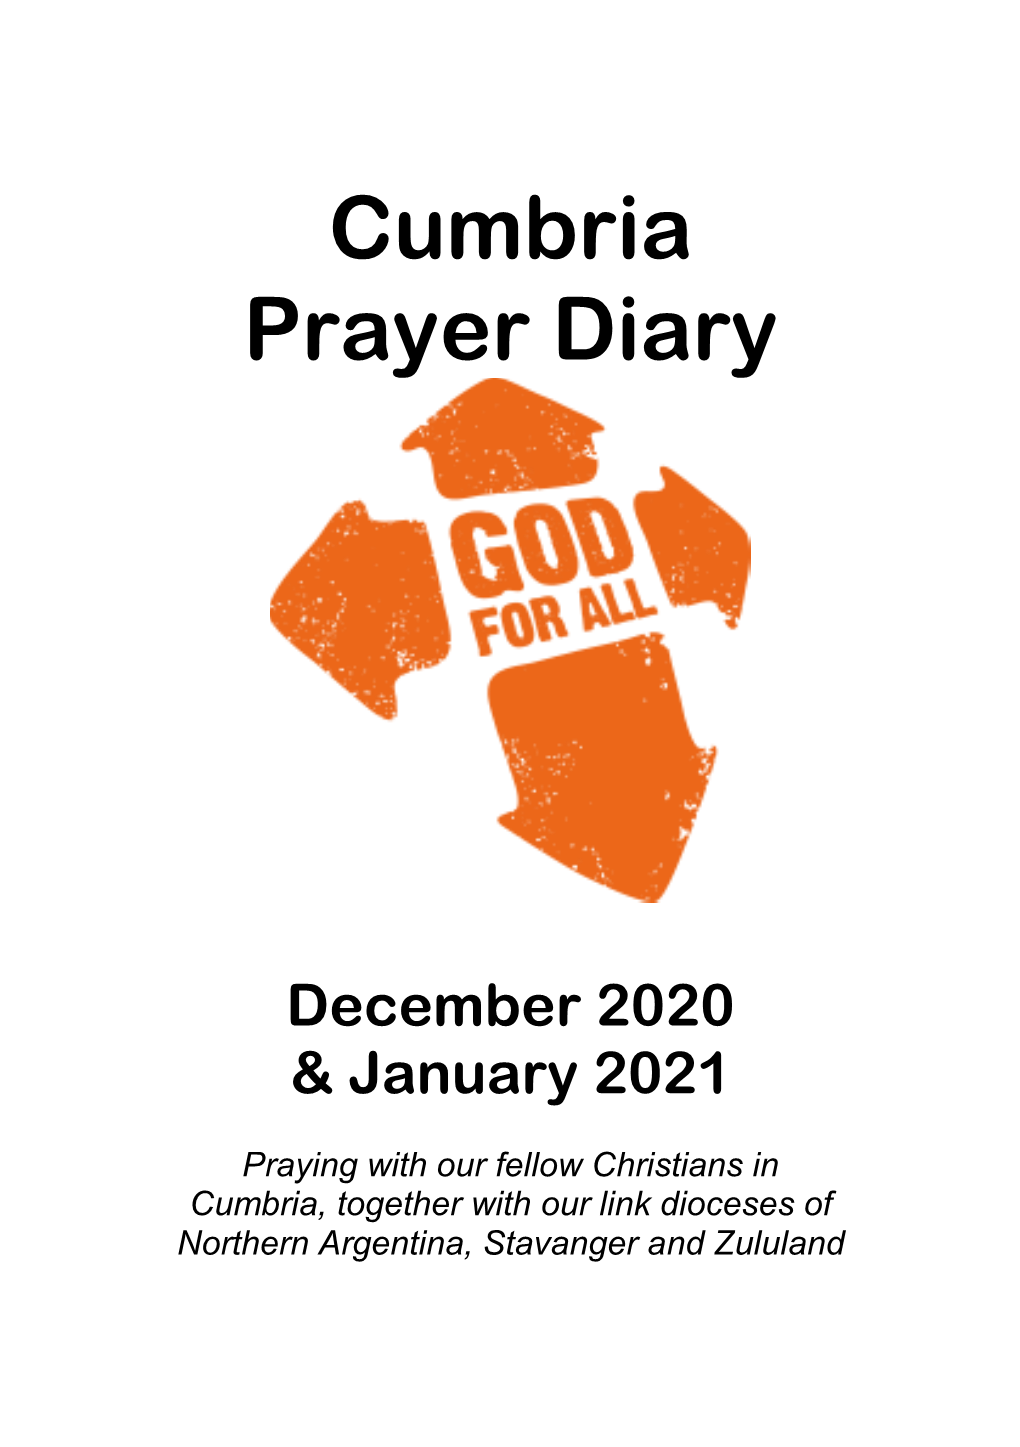 Cumbria Prayer Diary